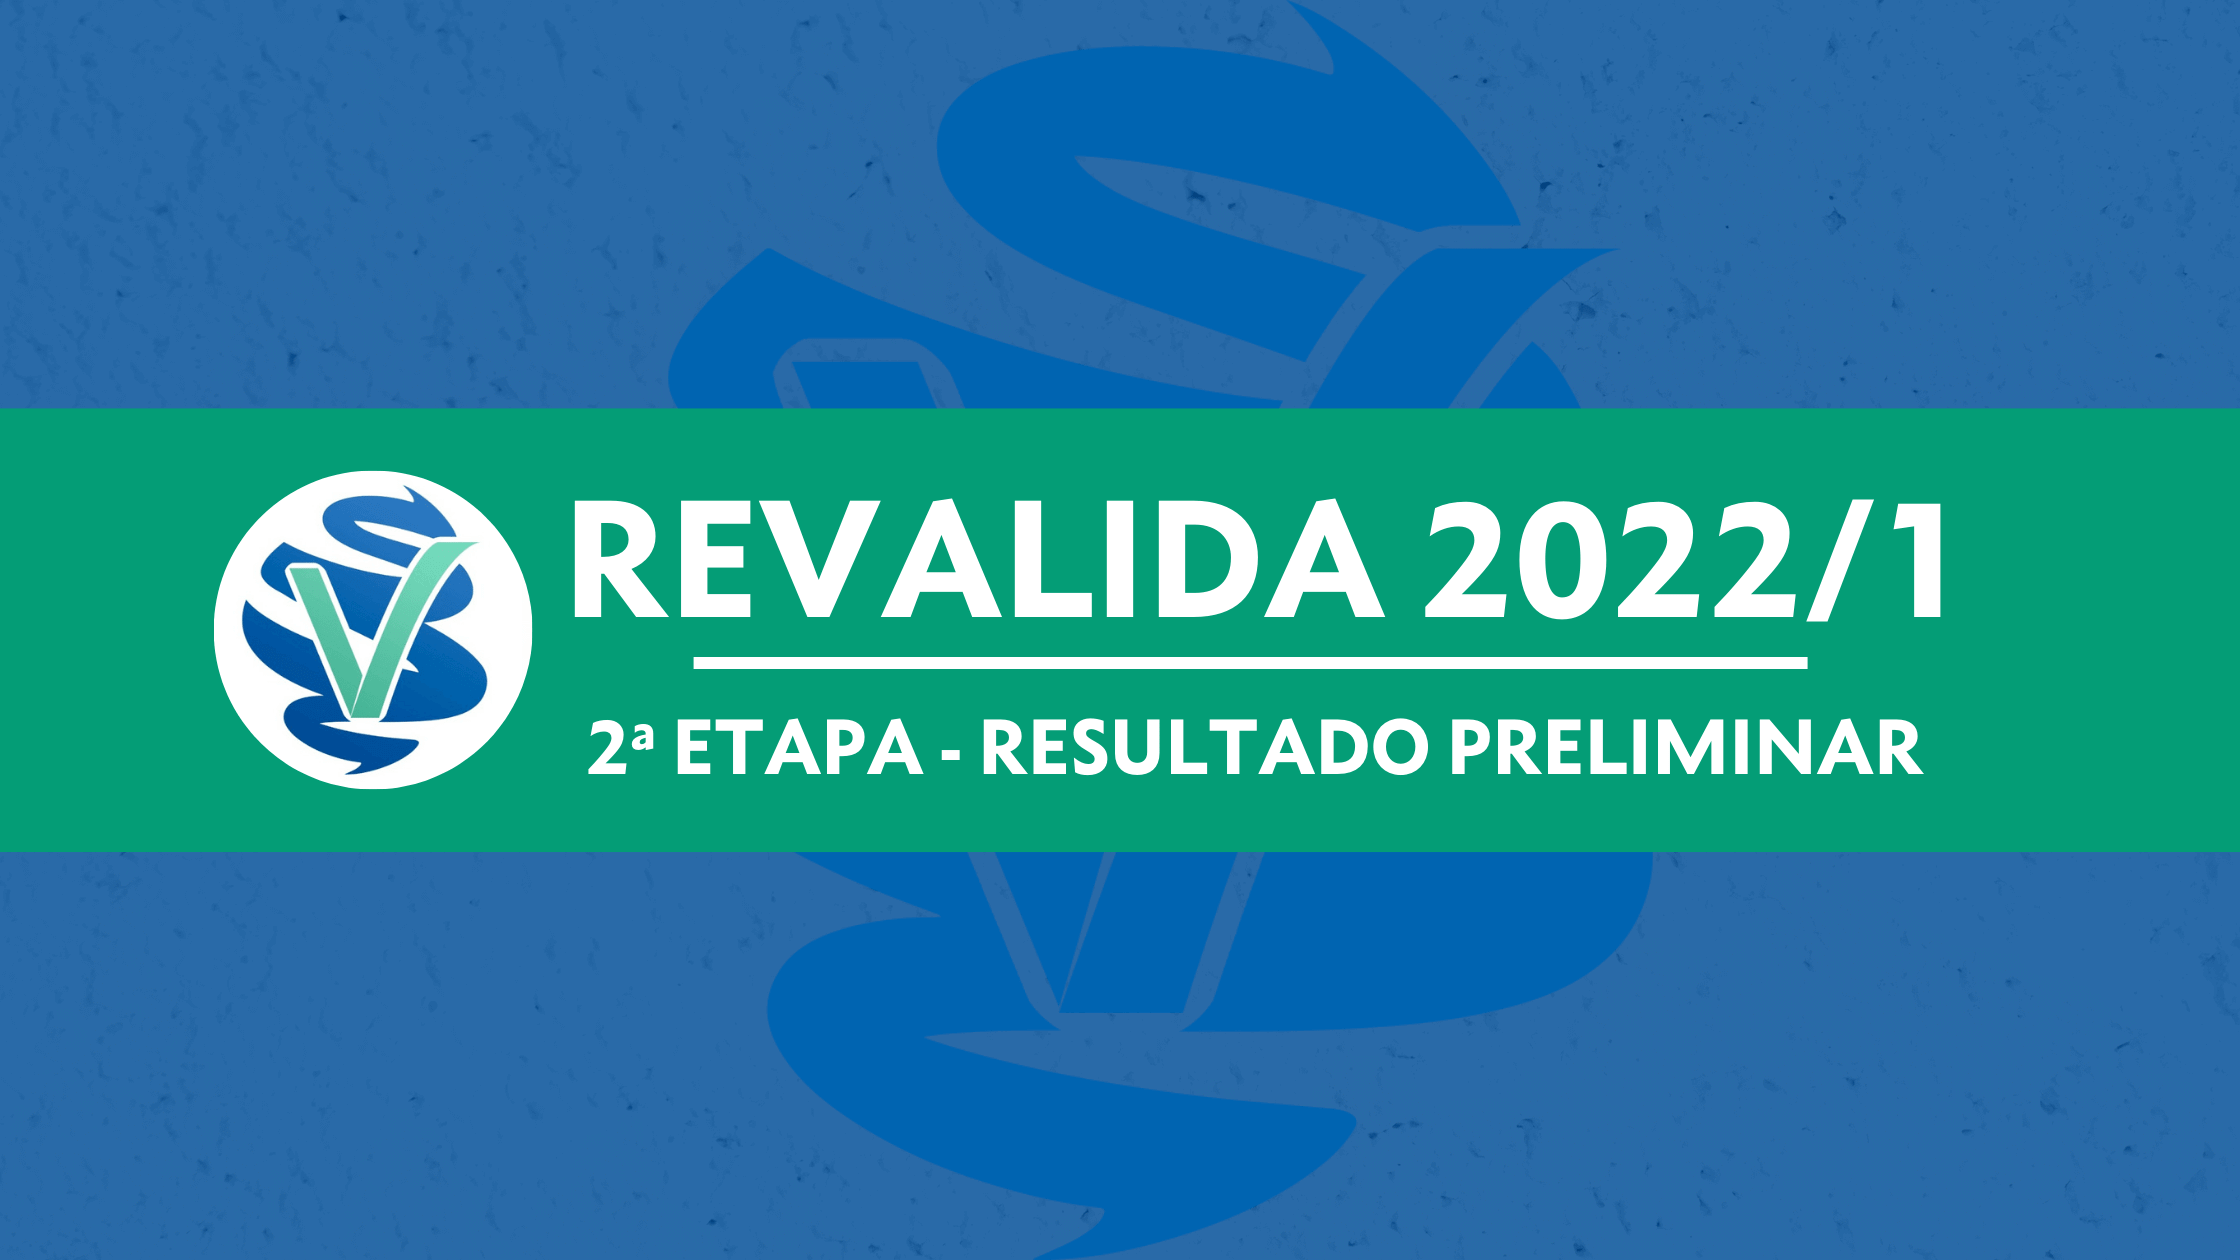 Revalida INEP 2022/1 resultados preliminares da 2ª etapa! Blog Grupo